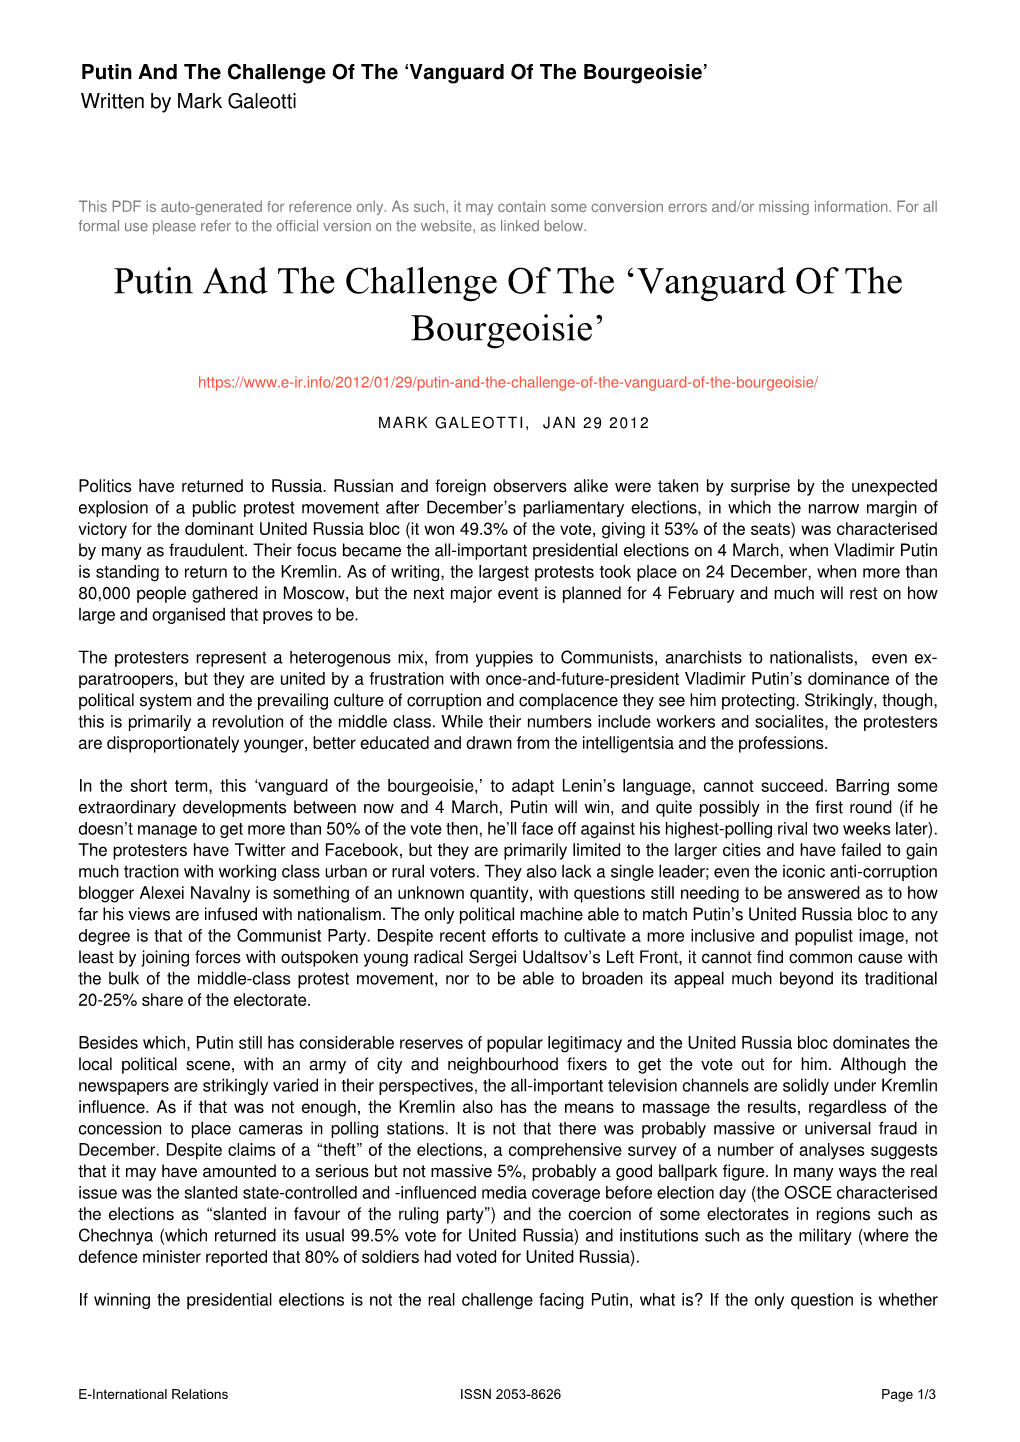 Vanguard of the Bourgeoisie’ Written by Mark Galeotti